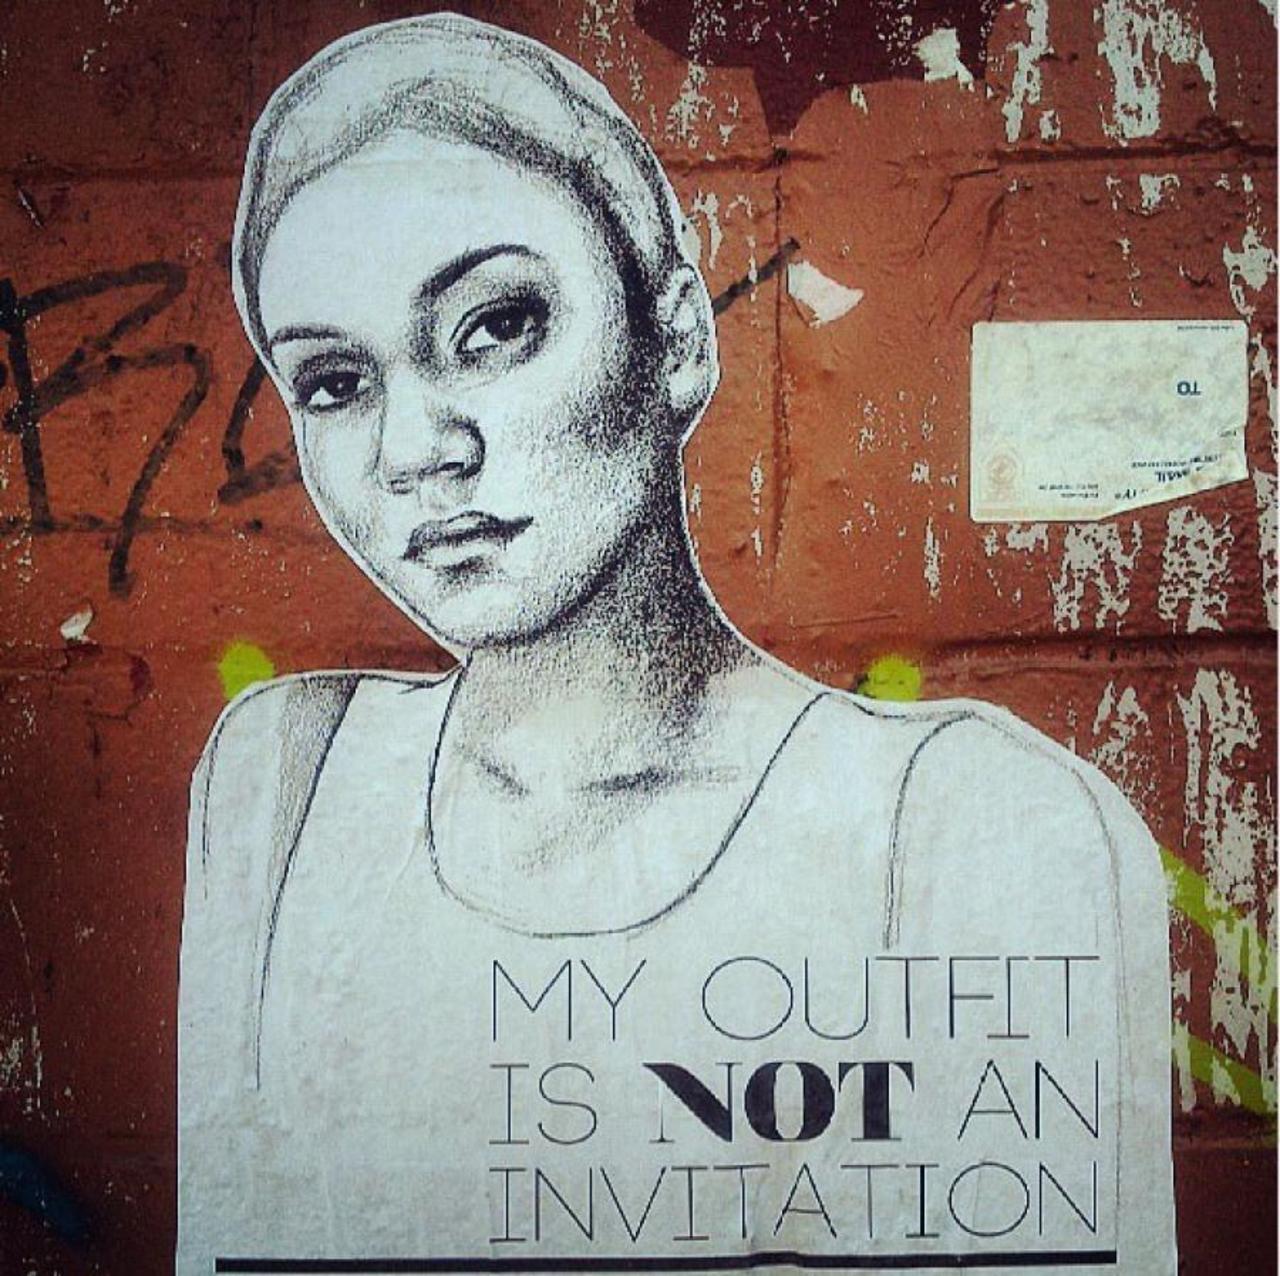 Tatyana Fazlalizadeh from NY w/ her project: "Stop Telling Women To Smile". #feminism #streetart #graffiti #art #NY http://t.co/UivyuBK2Ig